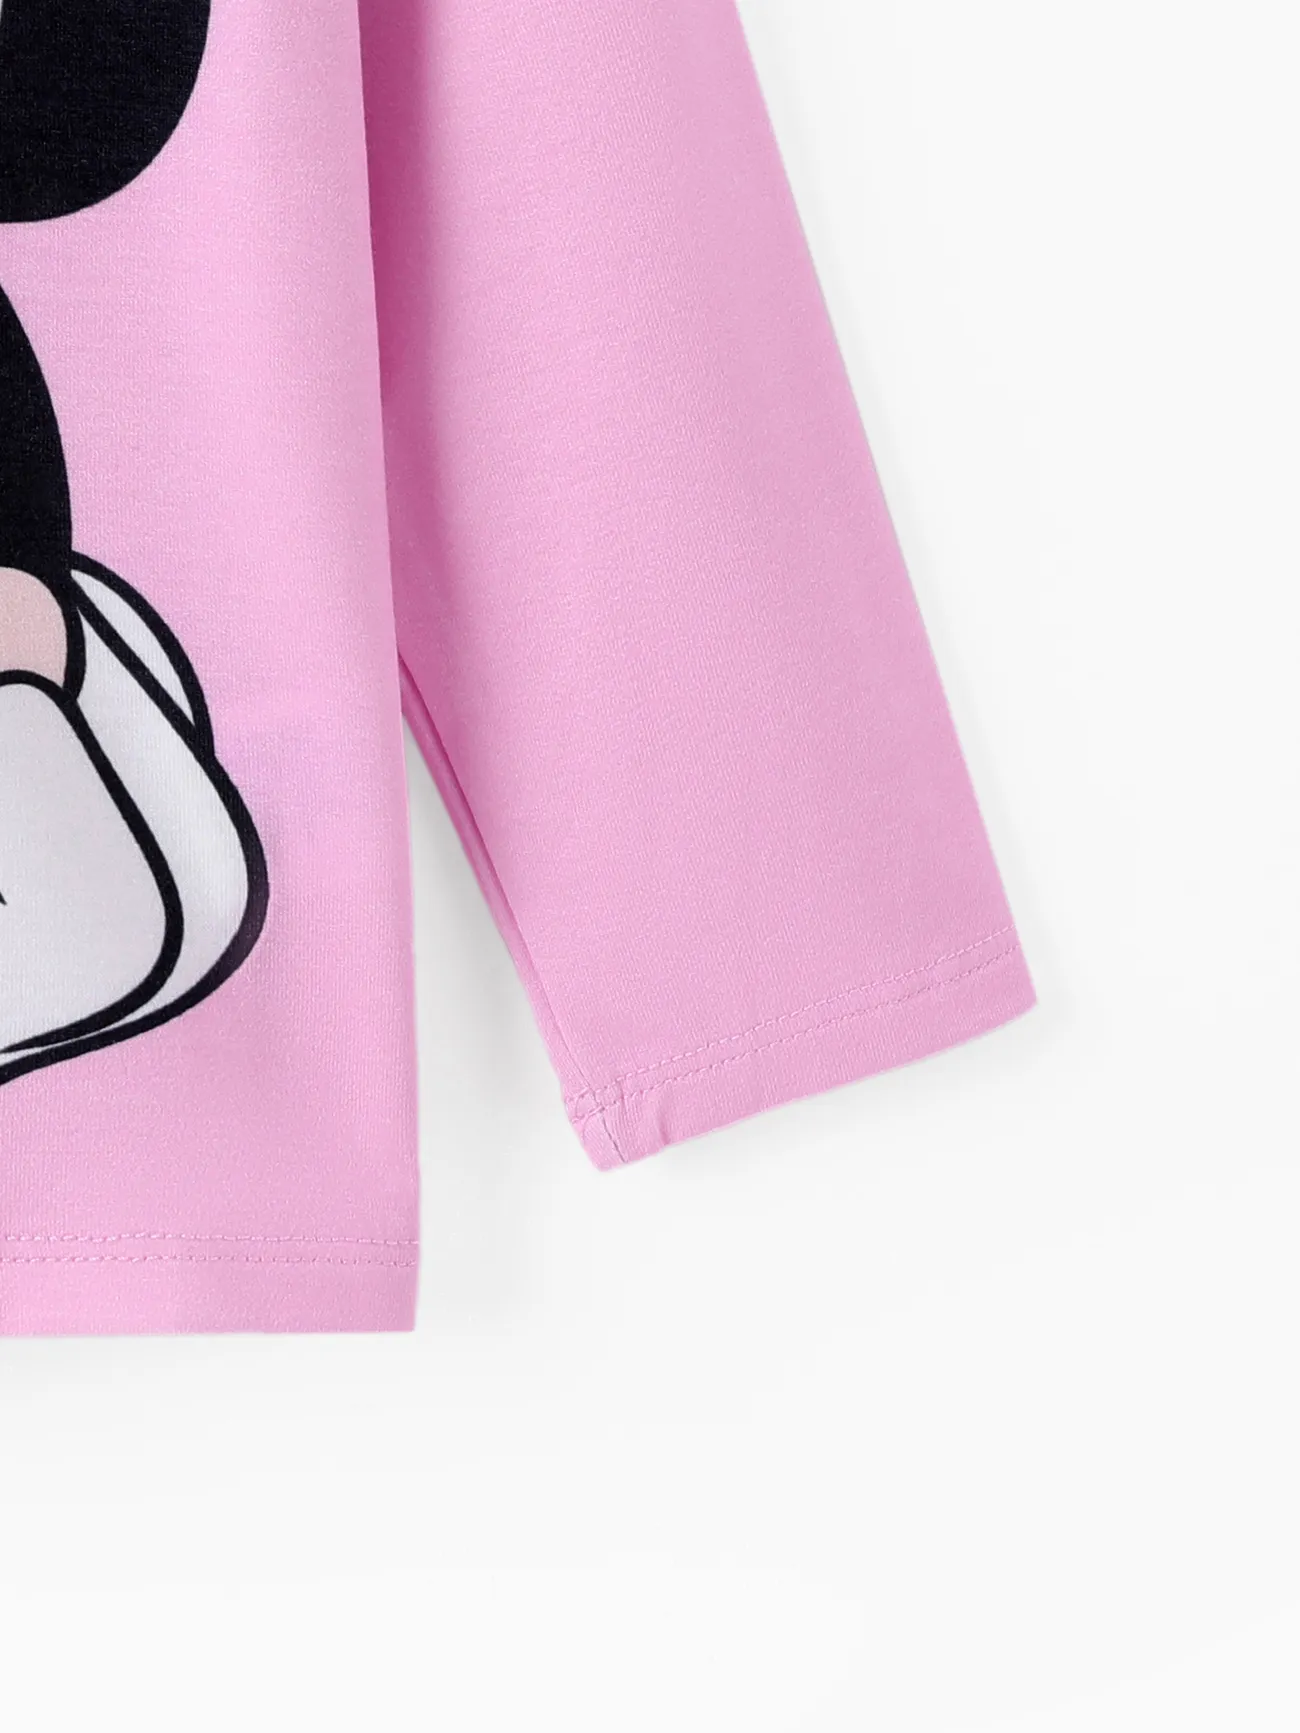 Disney Mickey and Friends Toddler & Kids Girl/Boy Naia™ Character Print Long-sleeve Tee Pink big image 1